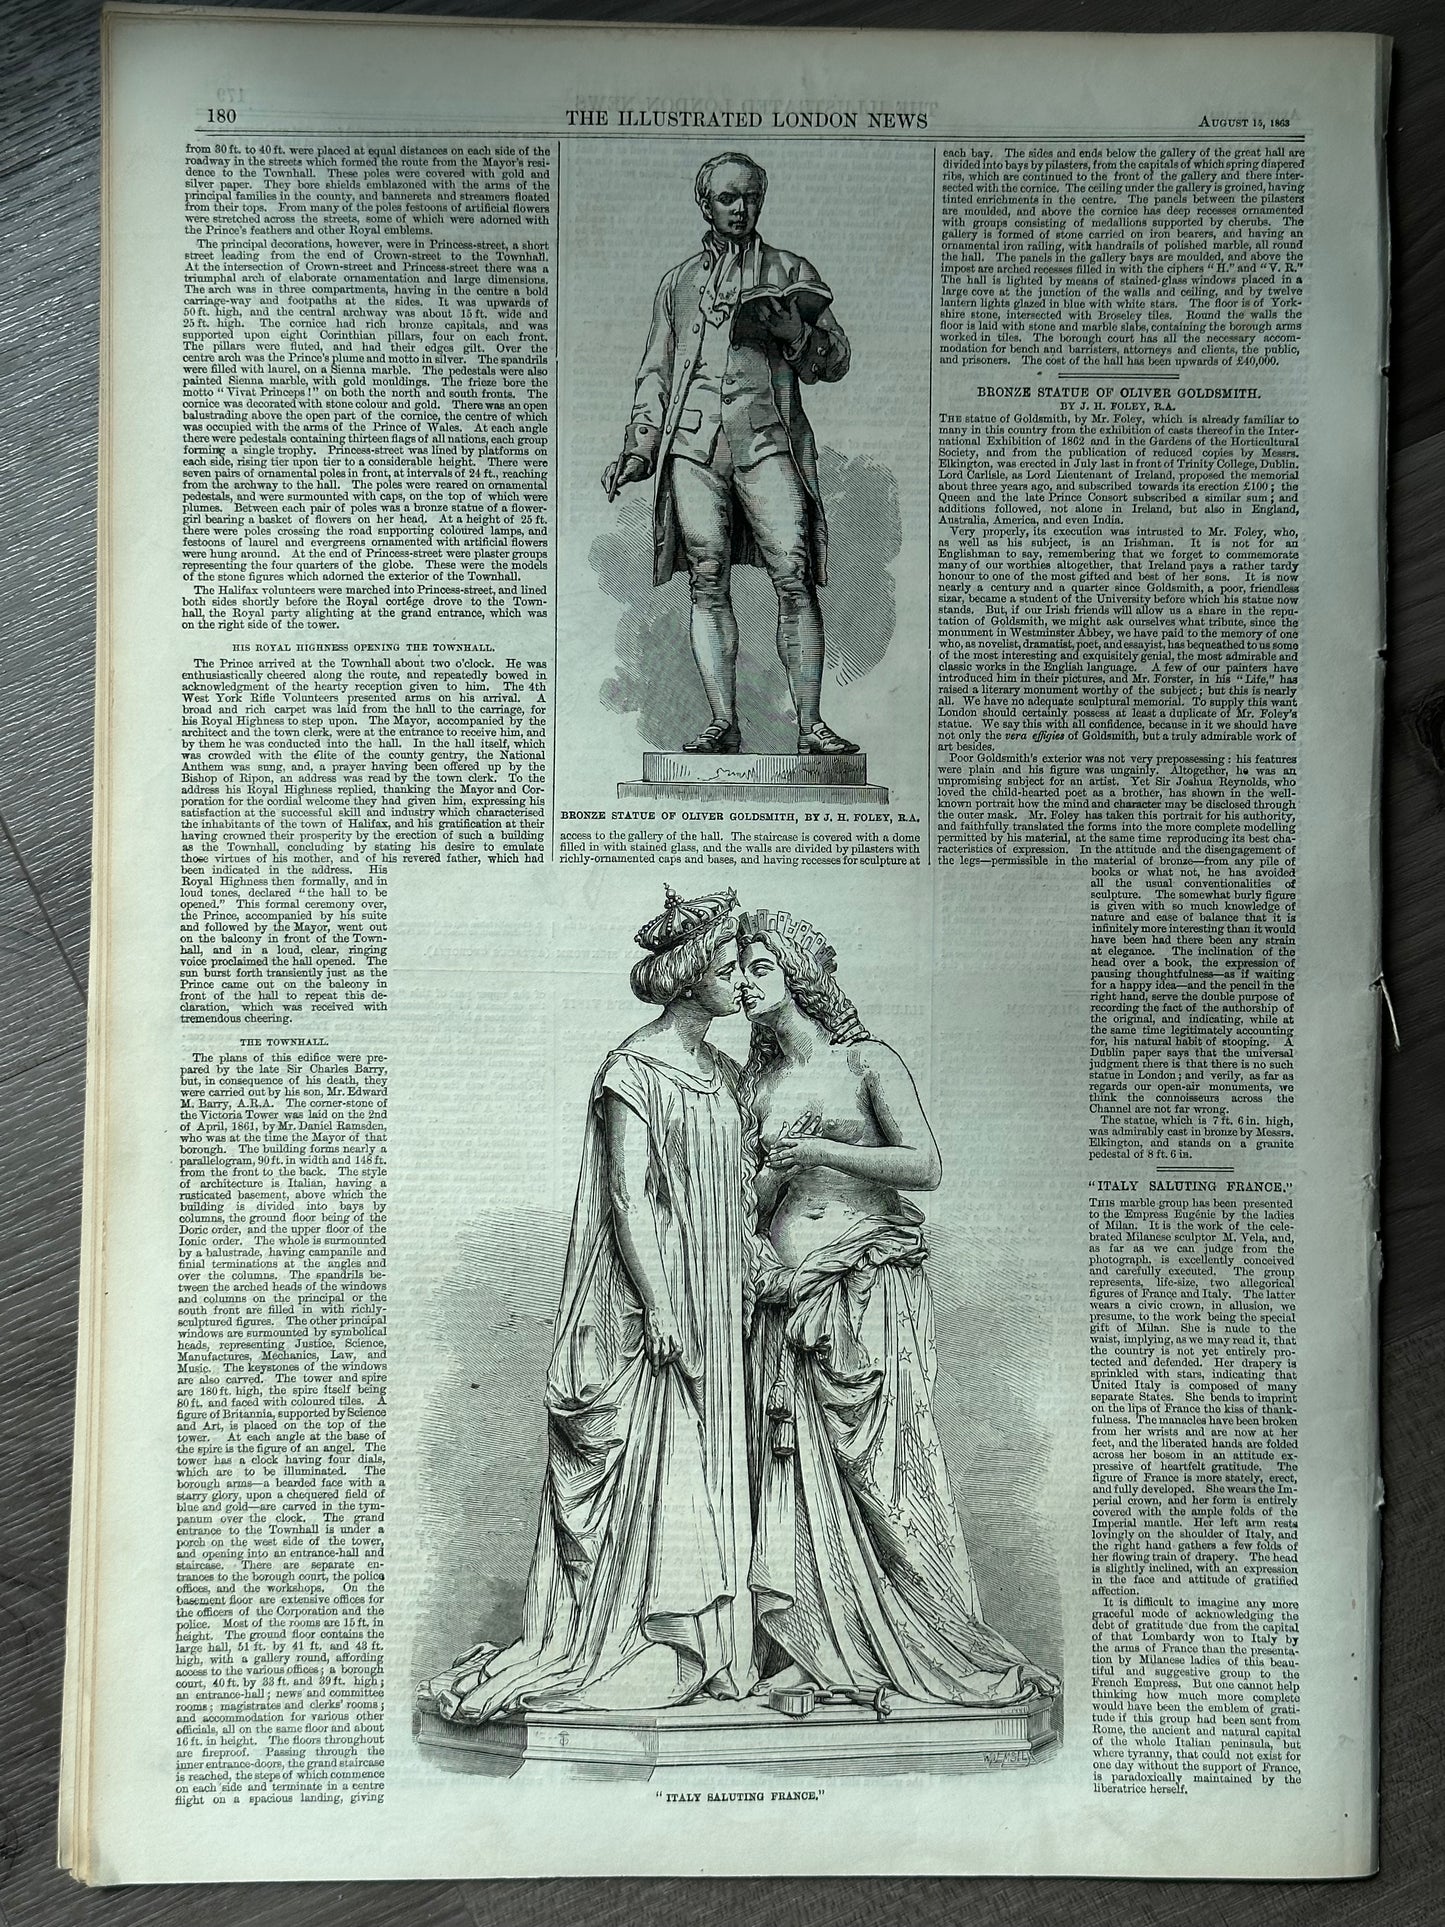 1863 Illustrated London News